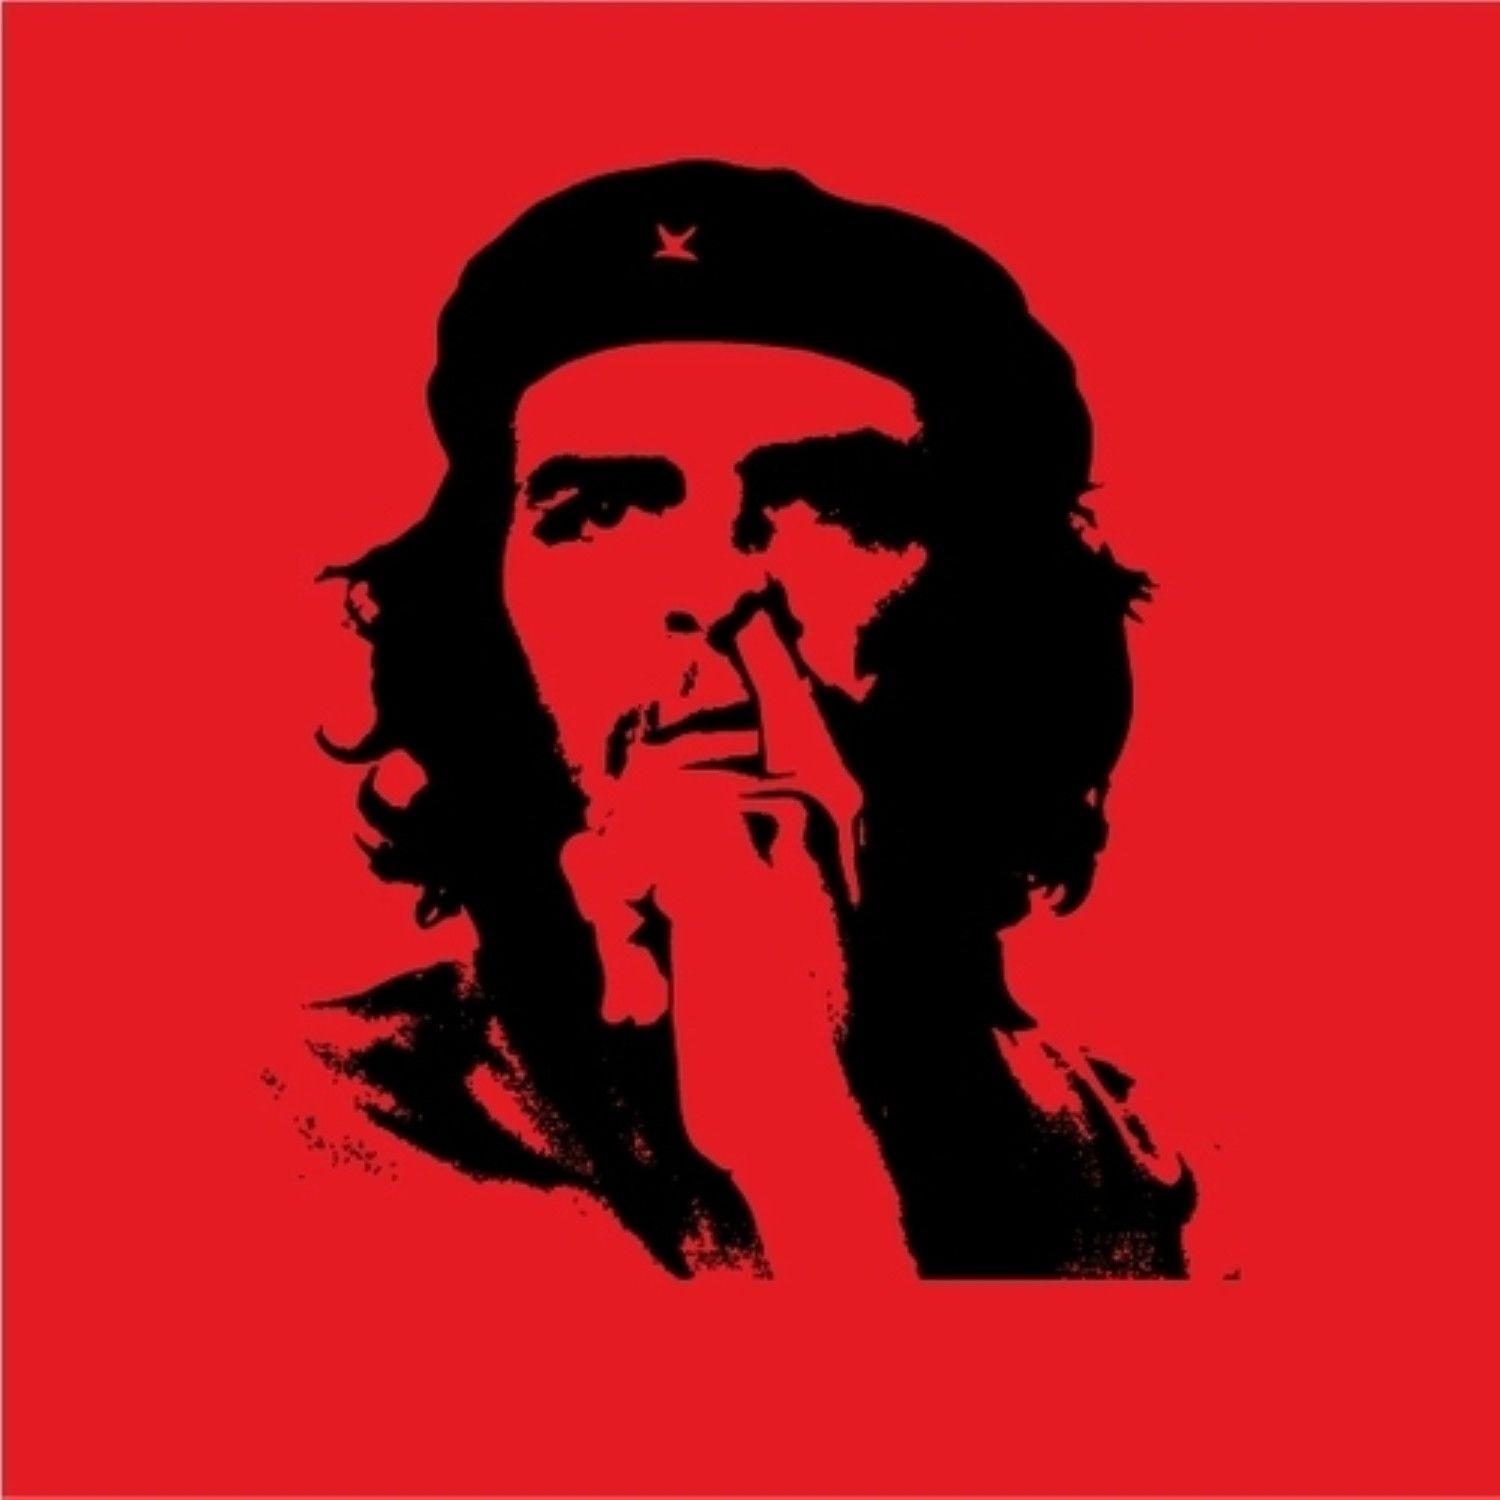 1500x1500px Che Guevara (102.79 KB).06.2015